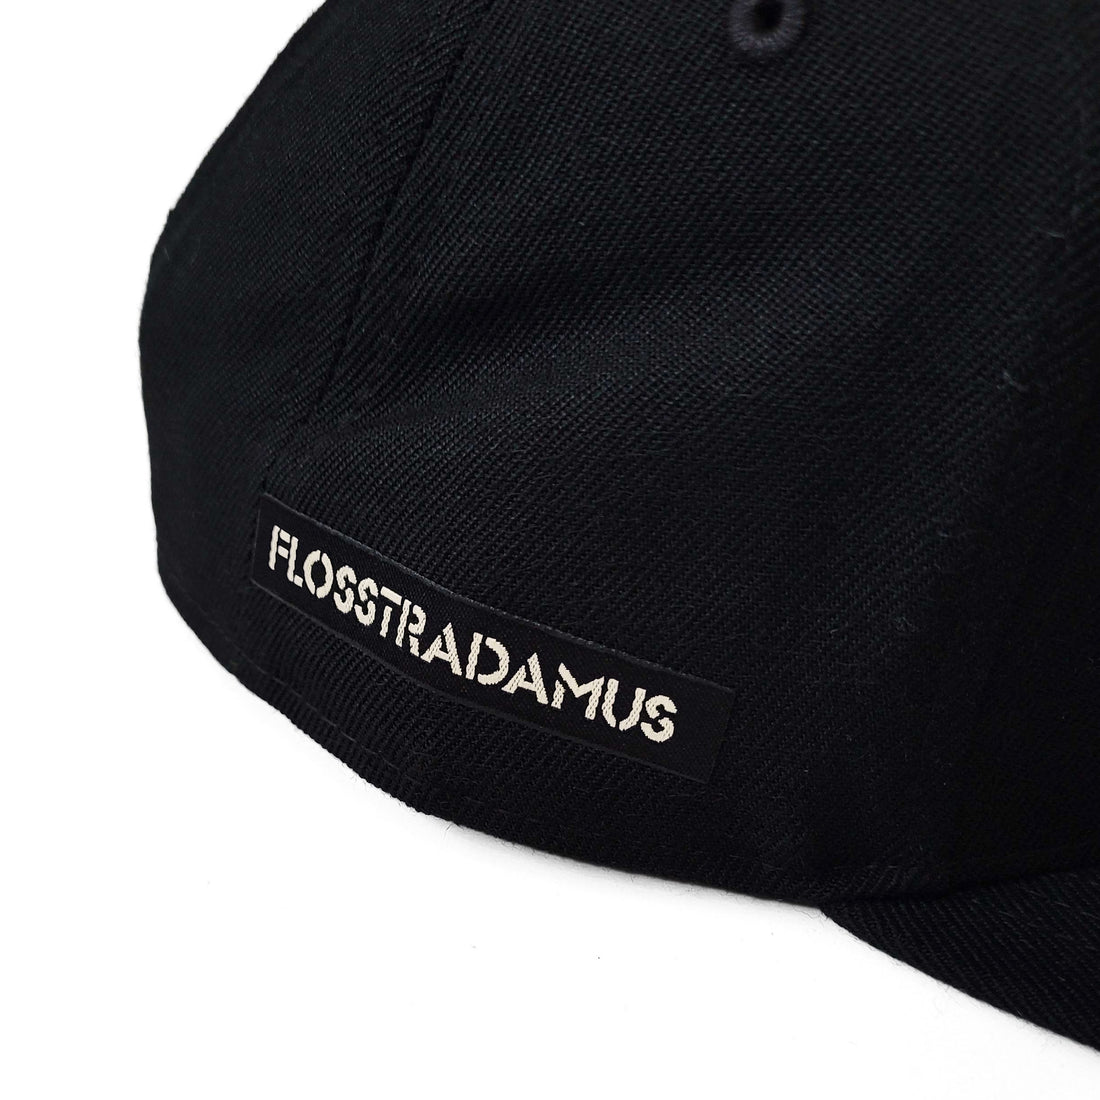 Flosstradamus - SAND CAPSULE CAP - Black